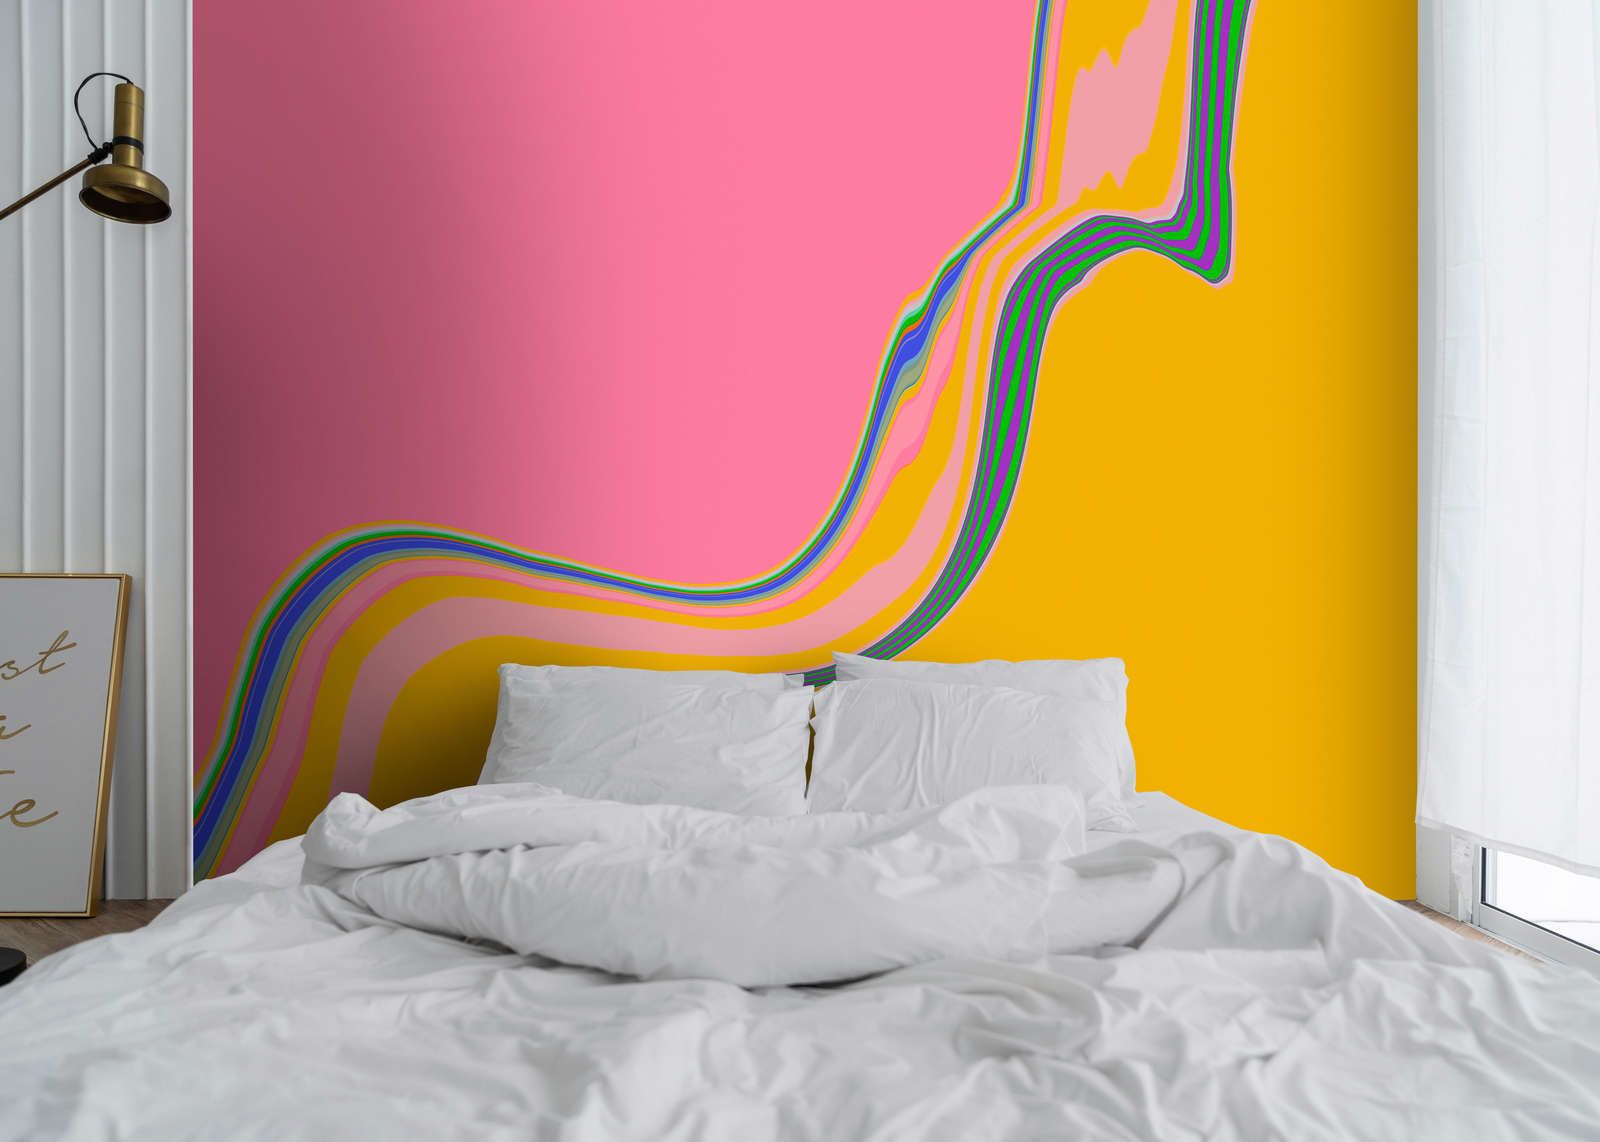             Digital behang »nexus« - Abstract golfontwerp - Roze, Oranje | Licht structuurvlies
        